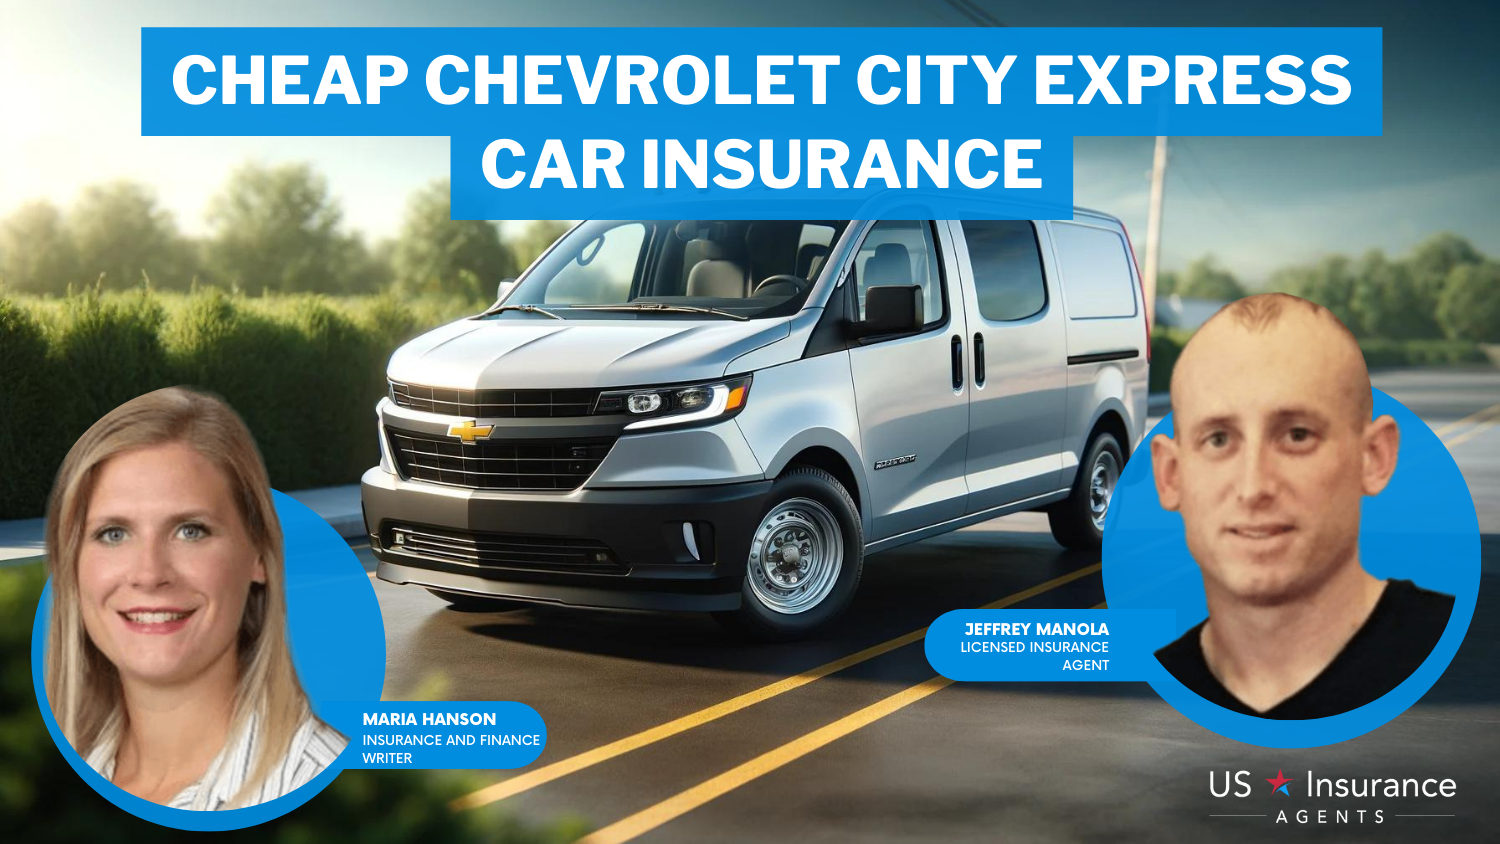 Travelers, Nationwide, Farmers: Cheap Chevrolet City Express Car Insurance